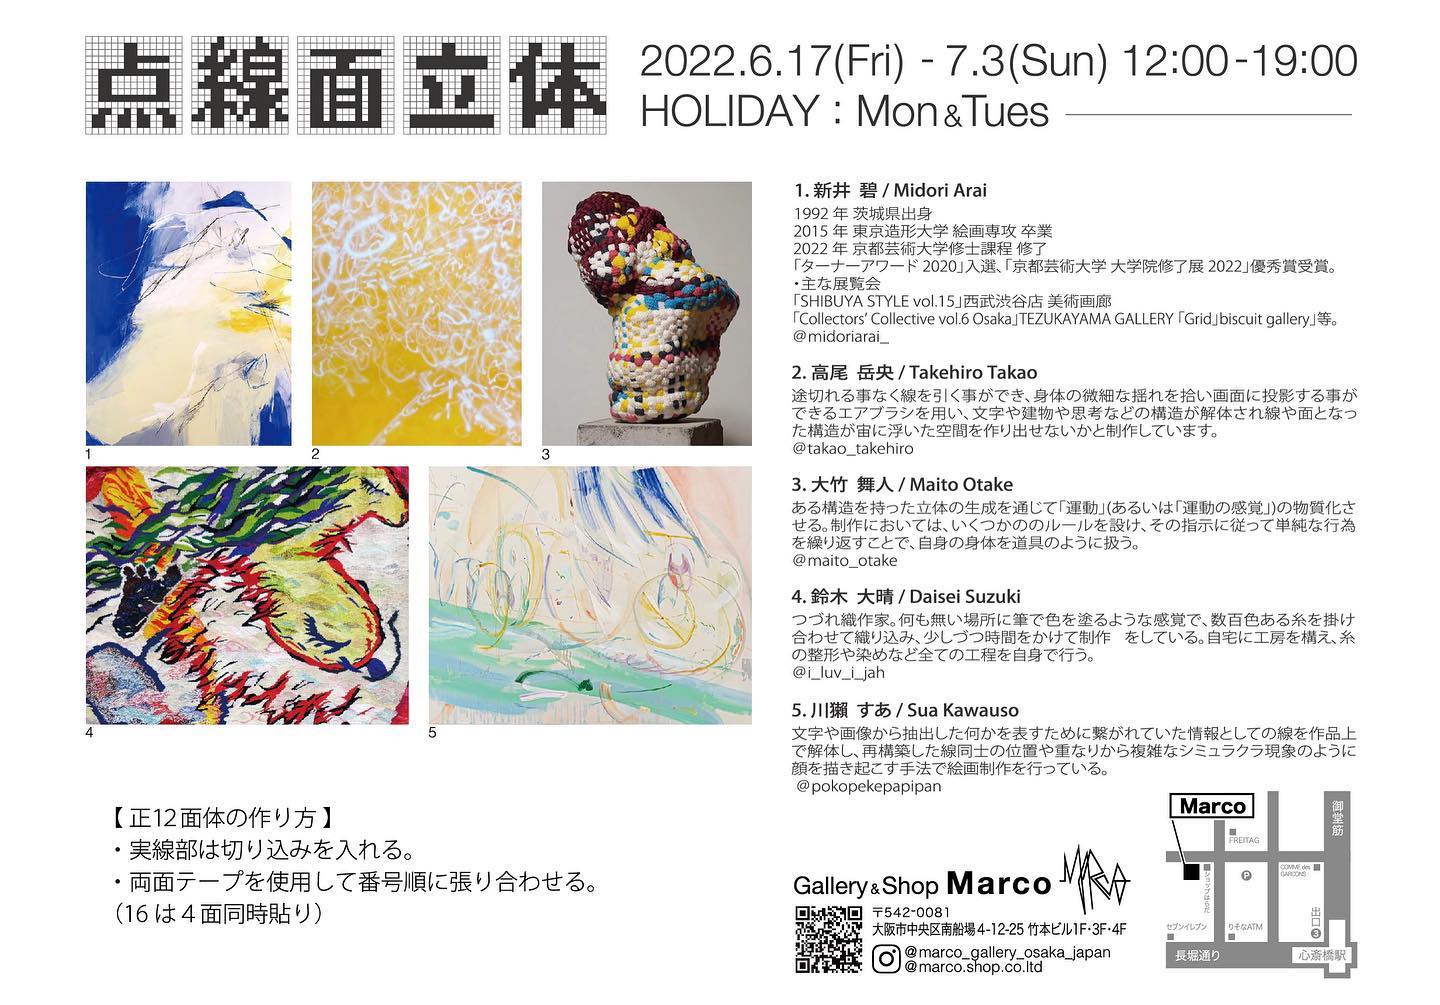 Marco Galleryにて、グループ展「点線面立体」開催。参加作家は新井碧、大竹舞人、川獺すあ、鈴木大晴、高尾岳央。